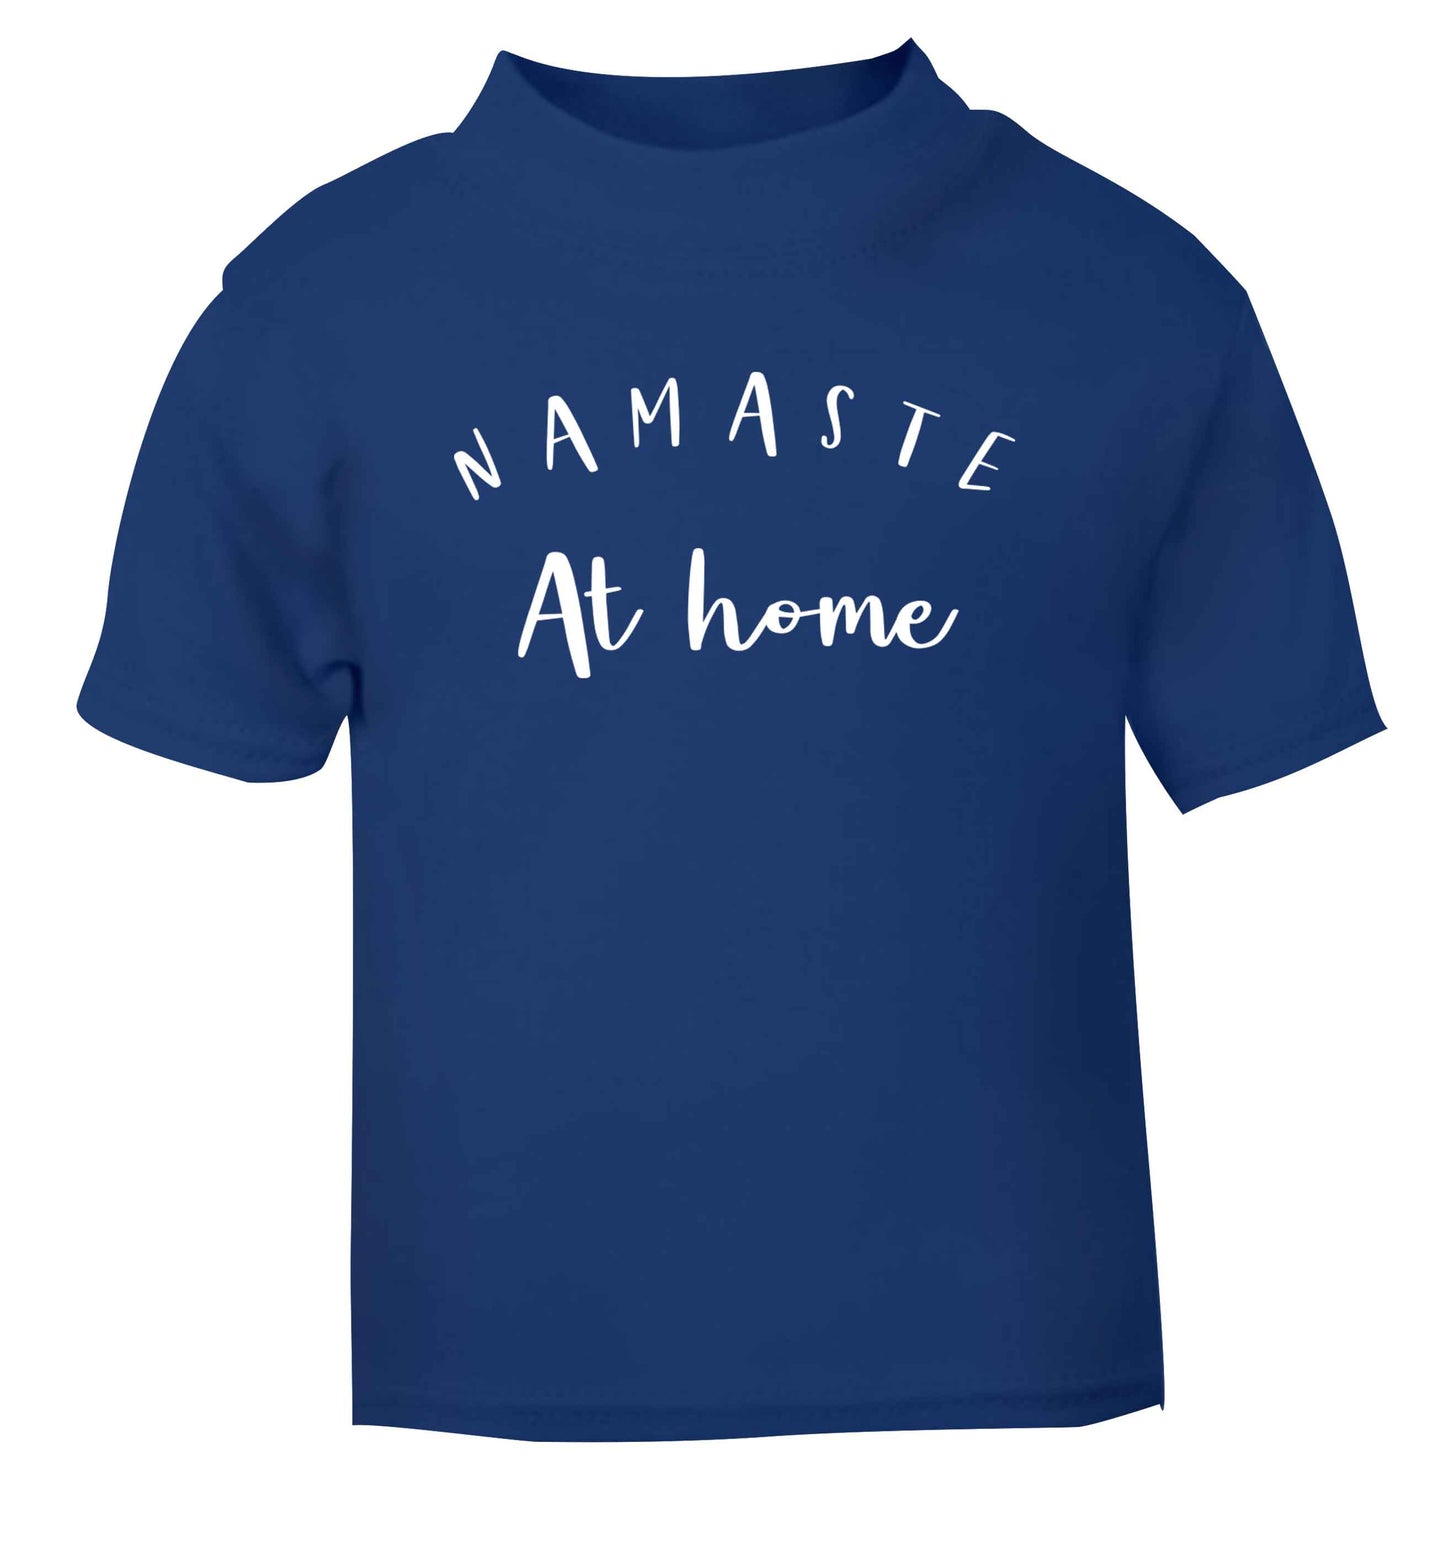 Namaste at home blue Baby Toddler Tshirt 2 Years